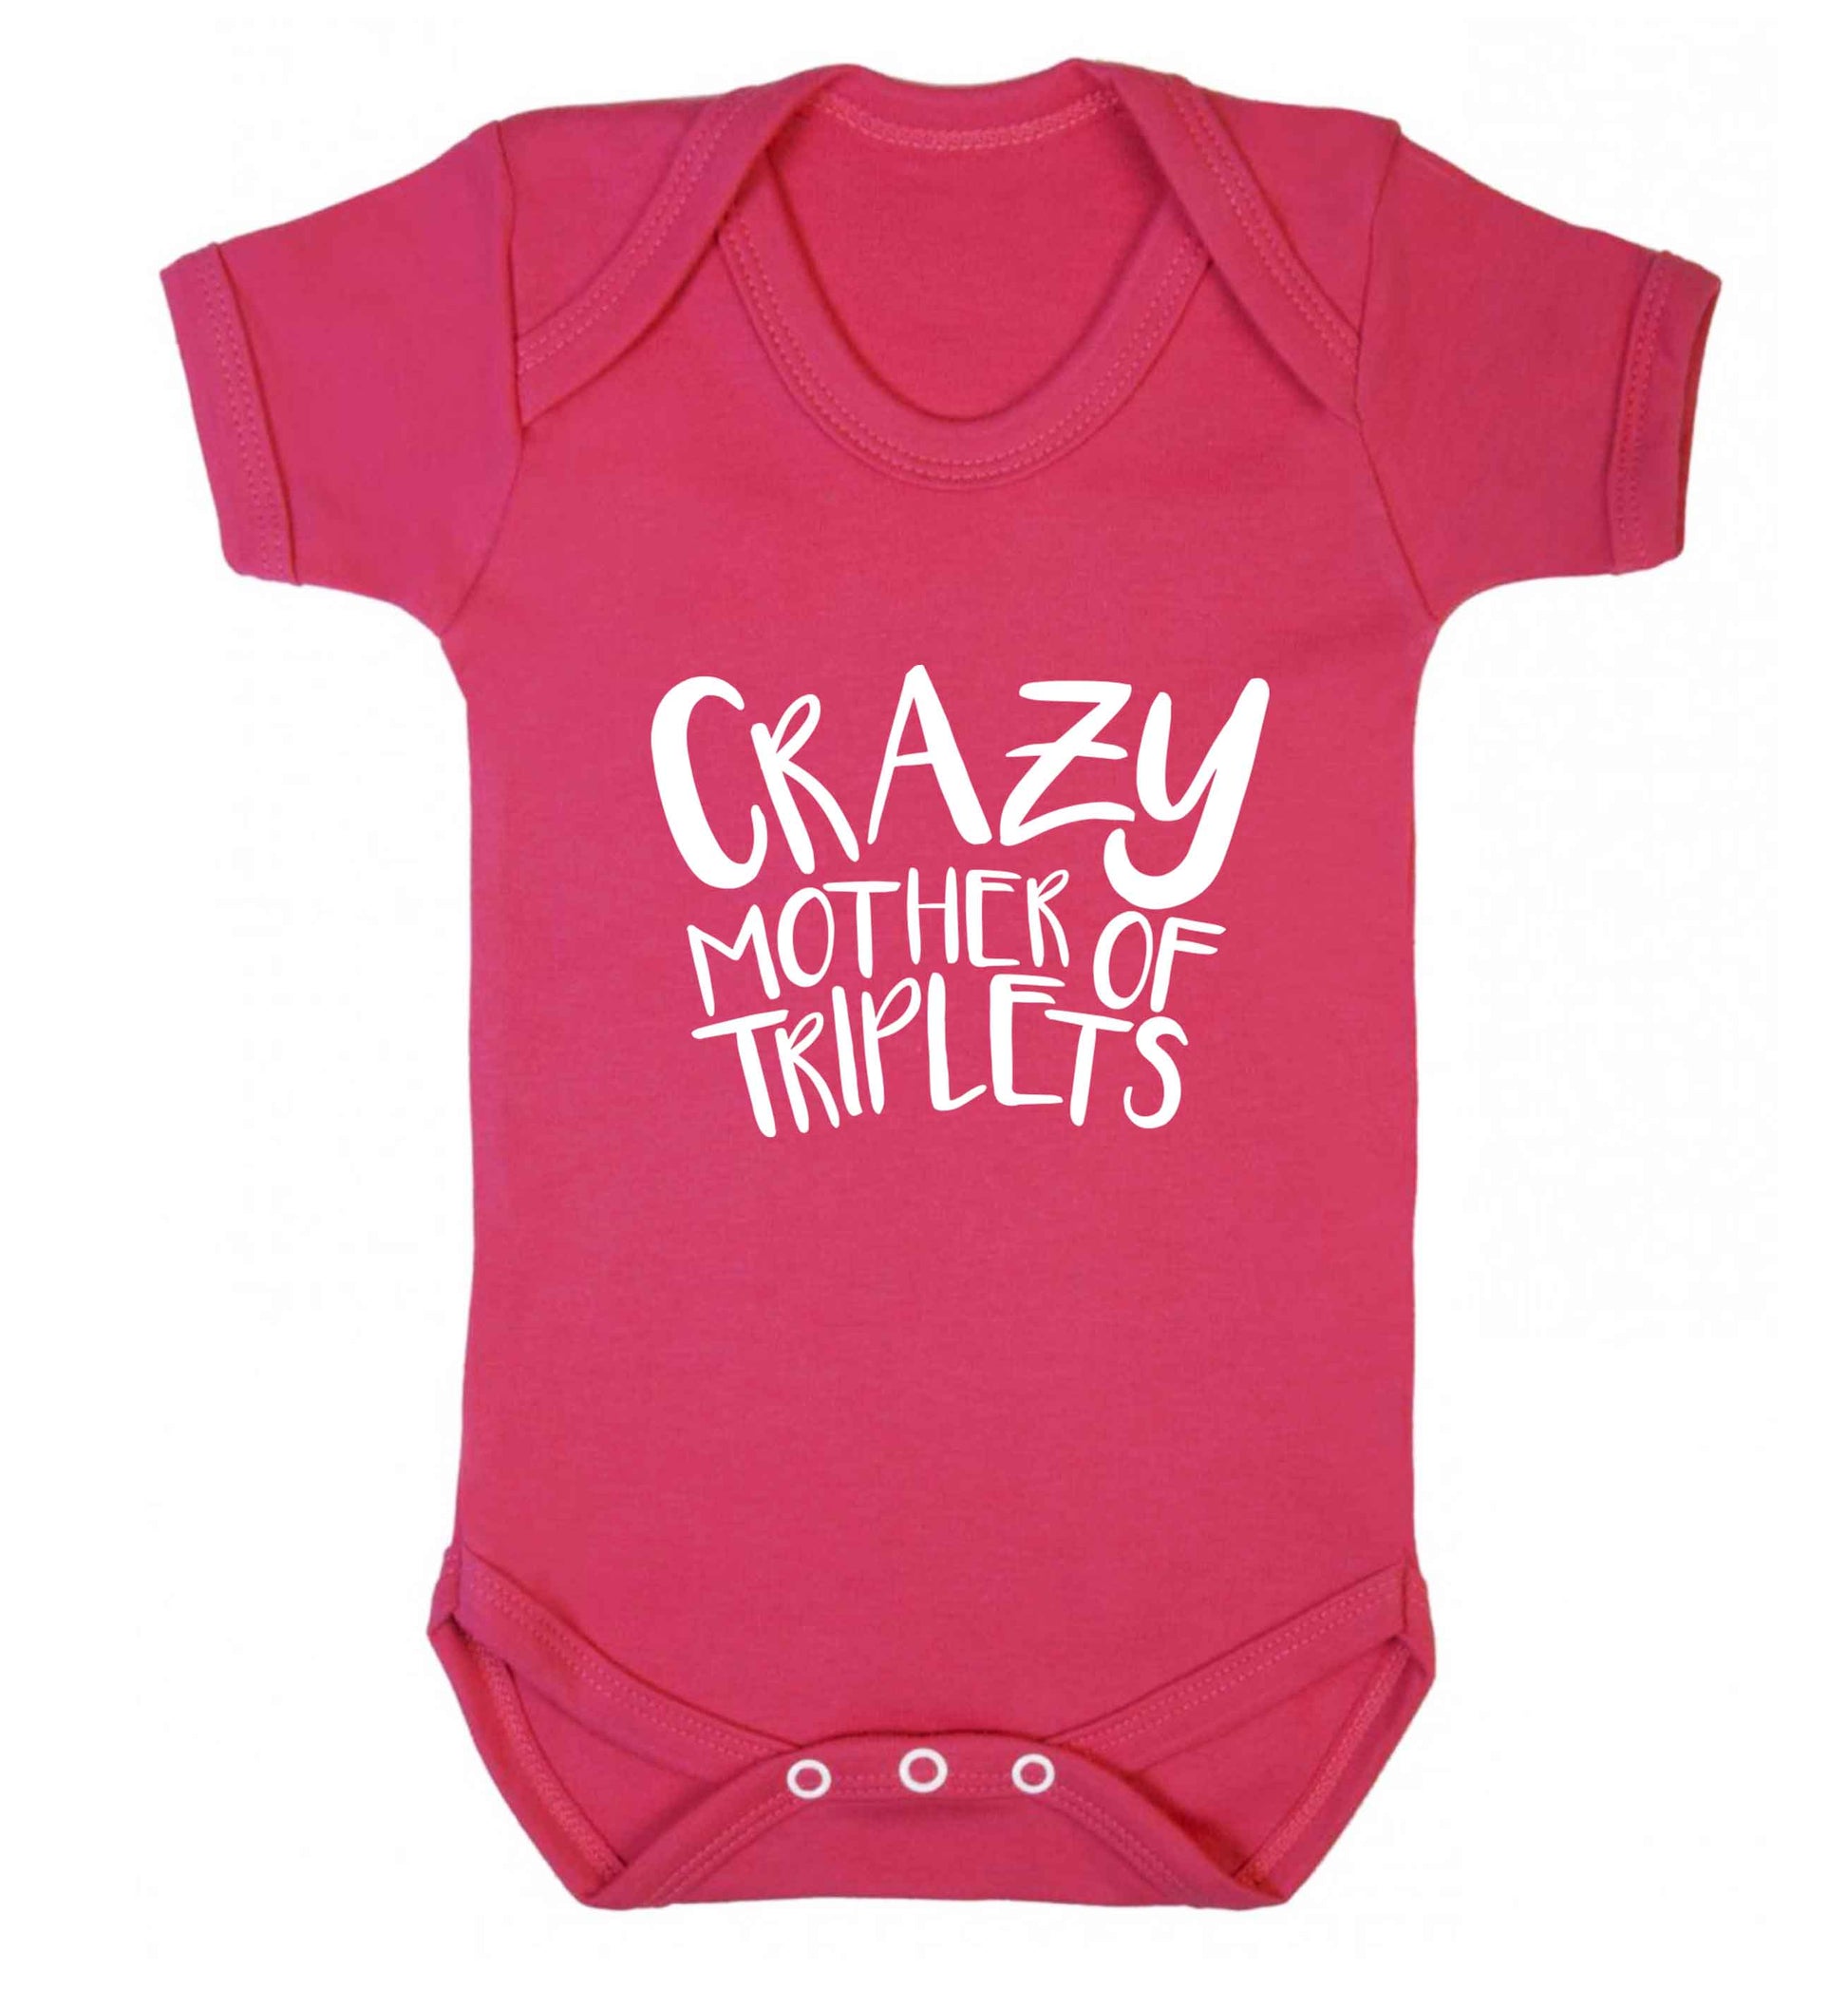 Crazy mother of triplets baby vest dark pink 18-24 months